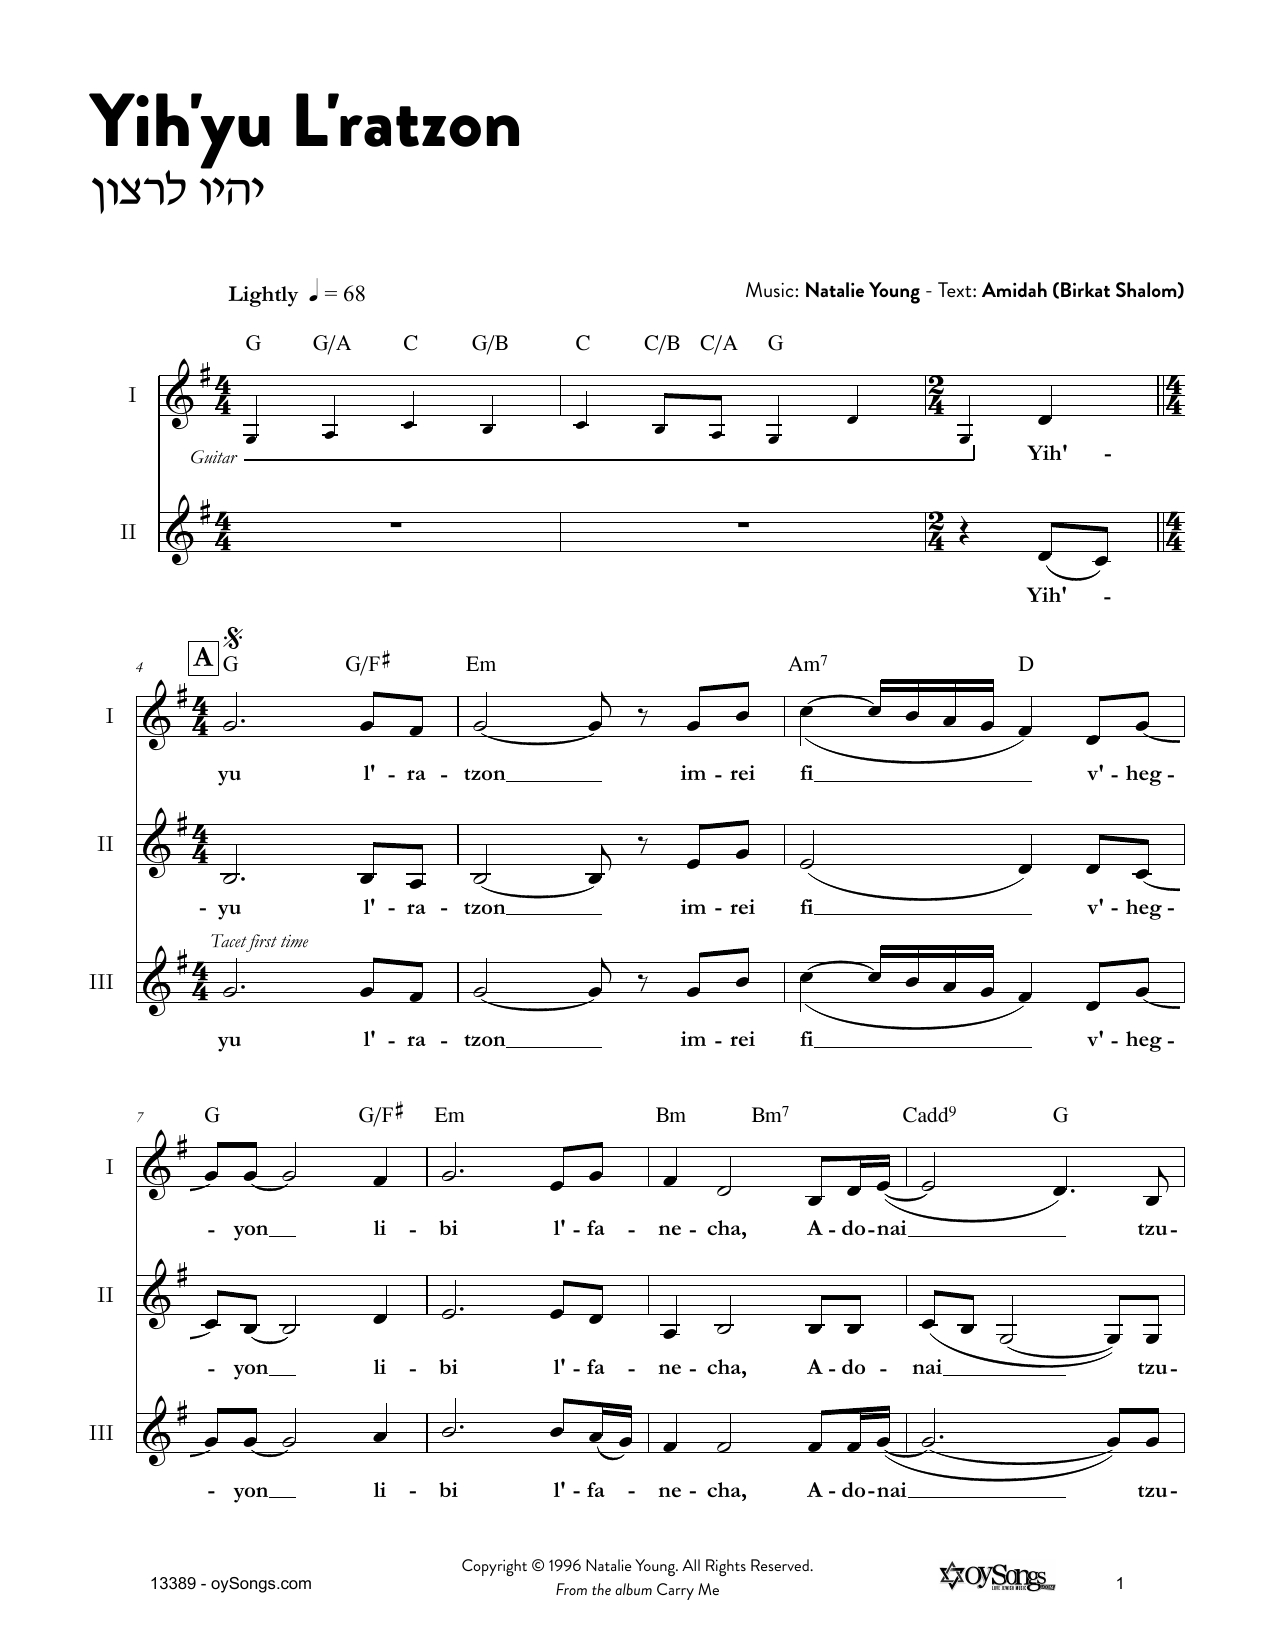 Natalie Young Yih'yu L'ratzon Sheet Music Notes & Chords for Melody Line, Lyrics & Chords - Download or Print PDF